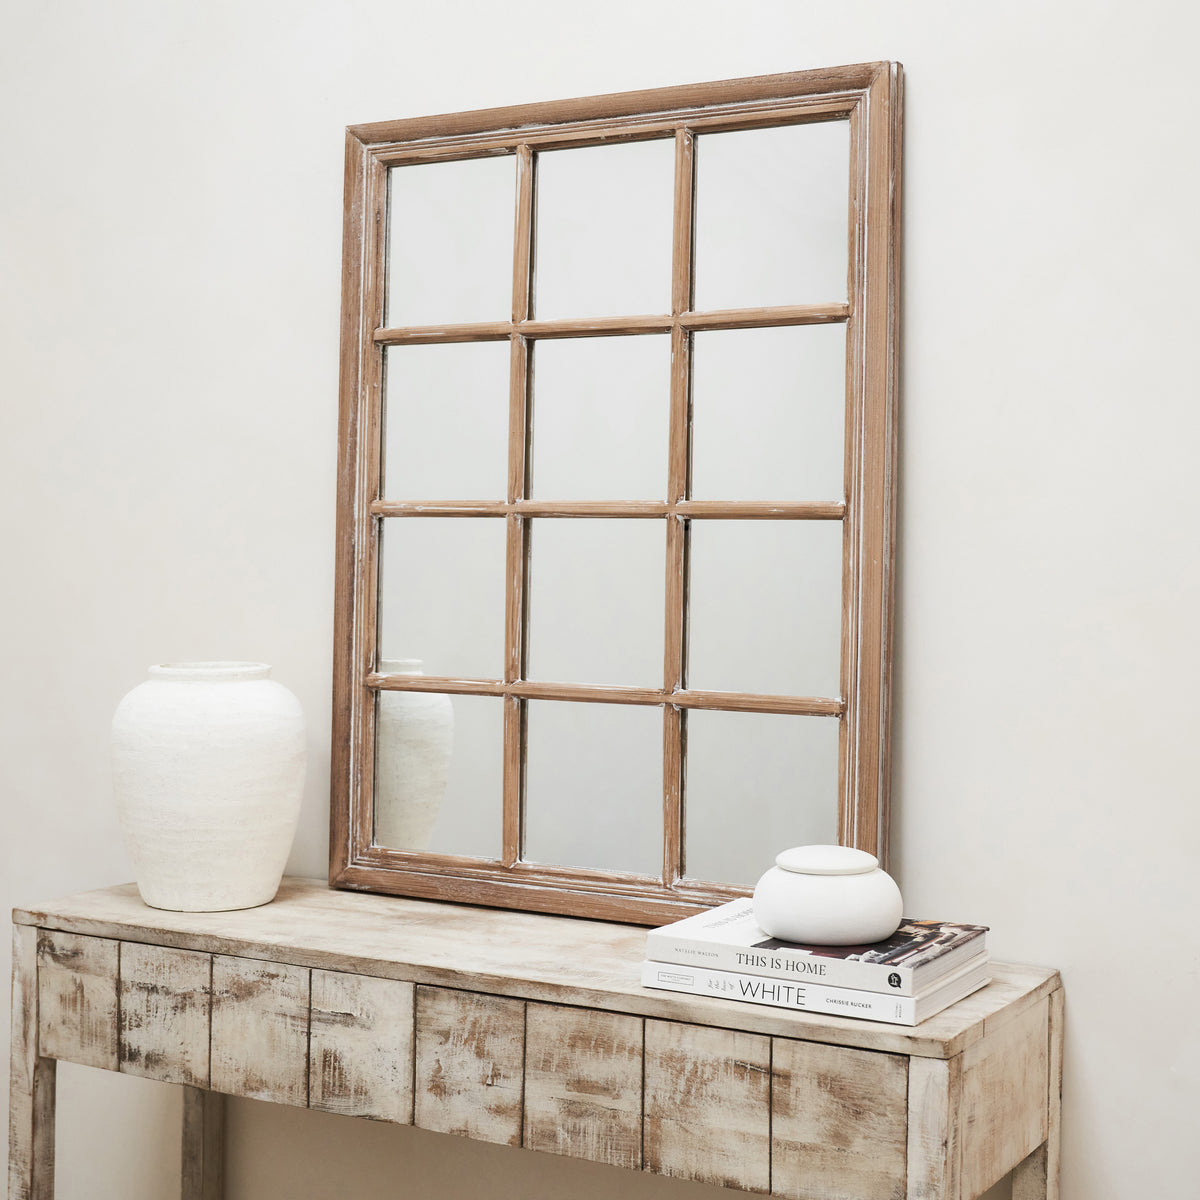 Sasha - Oak Shabby Chic Rectangular Window Mirror 100cm x 75cm